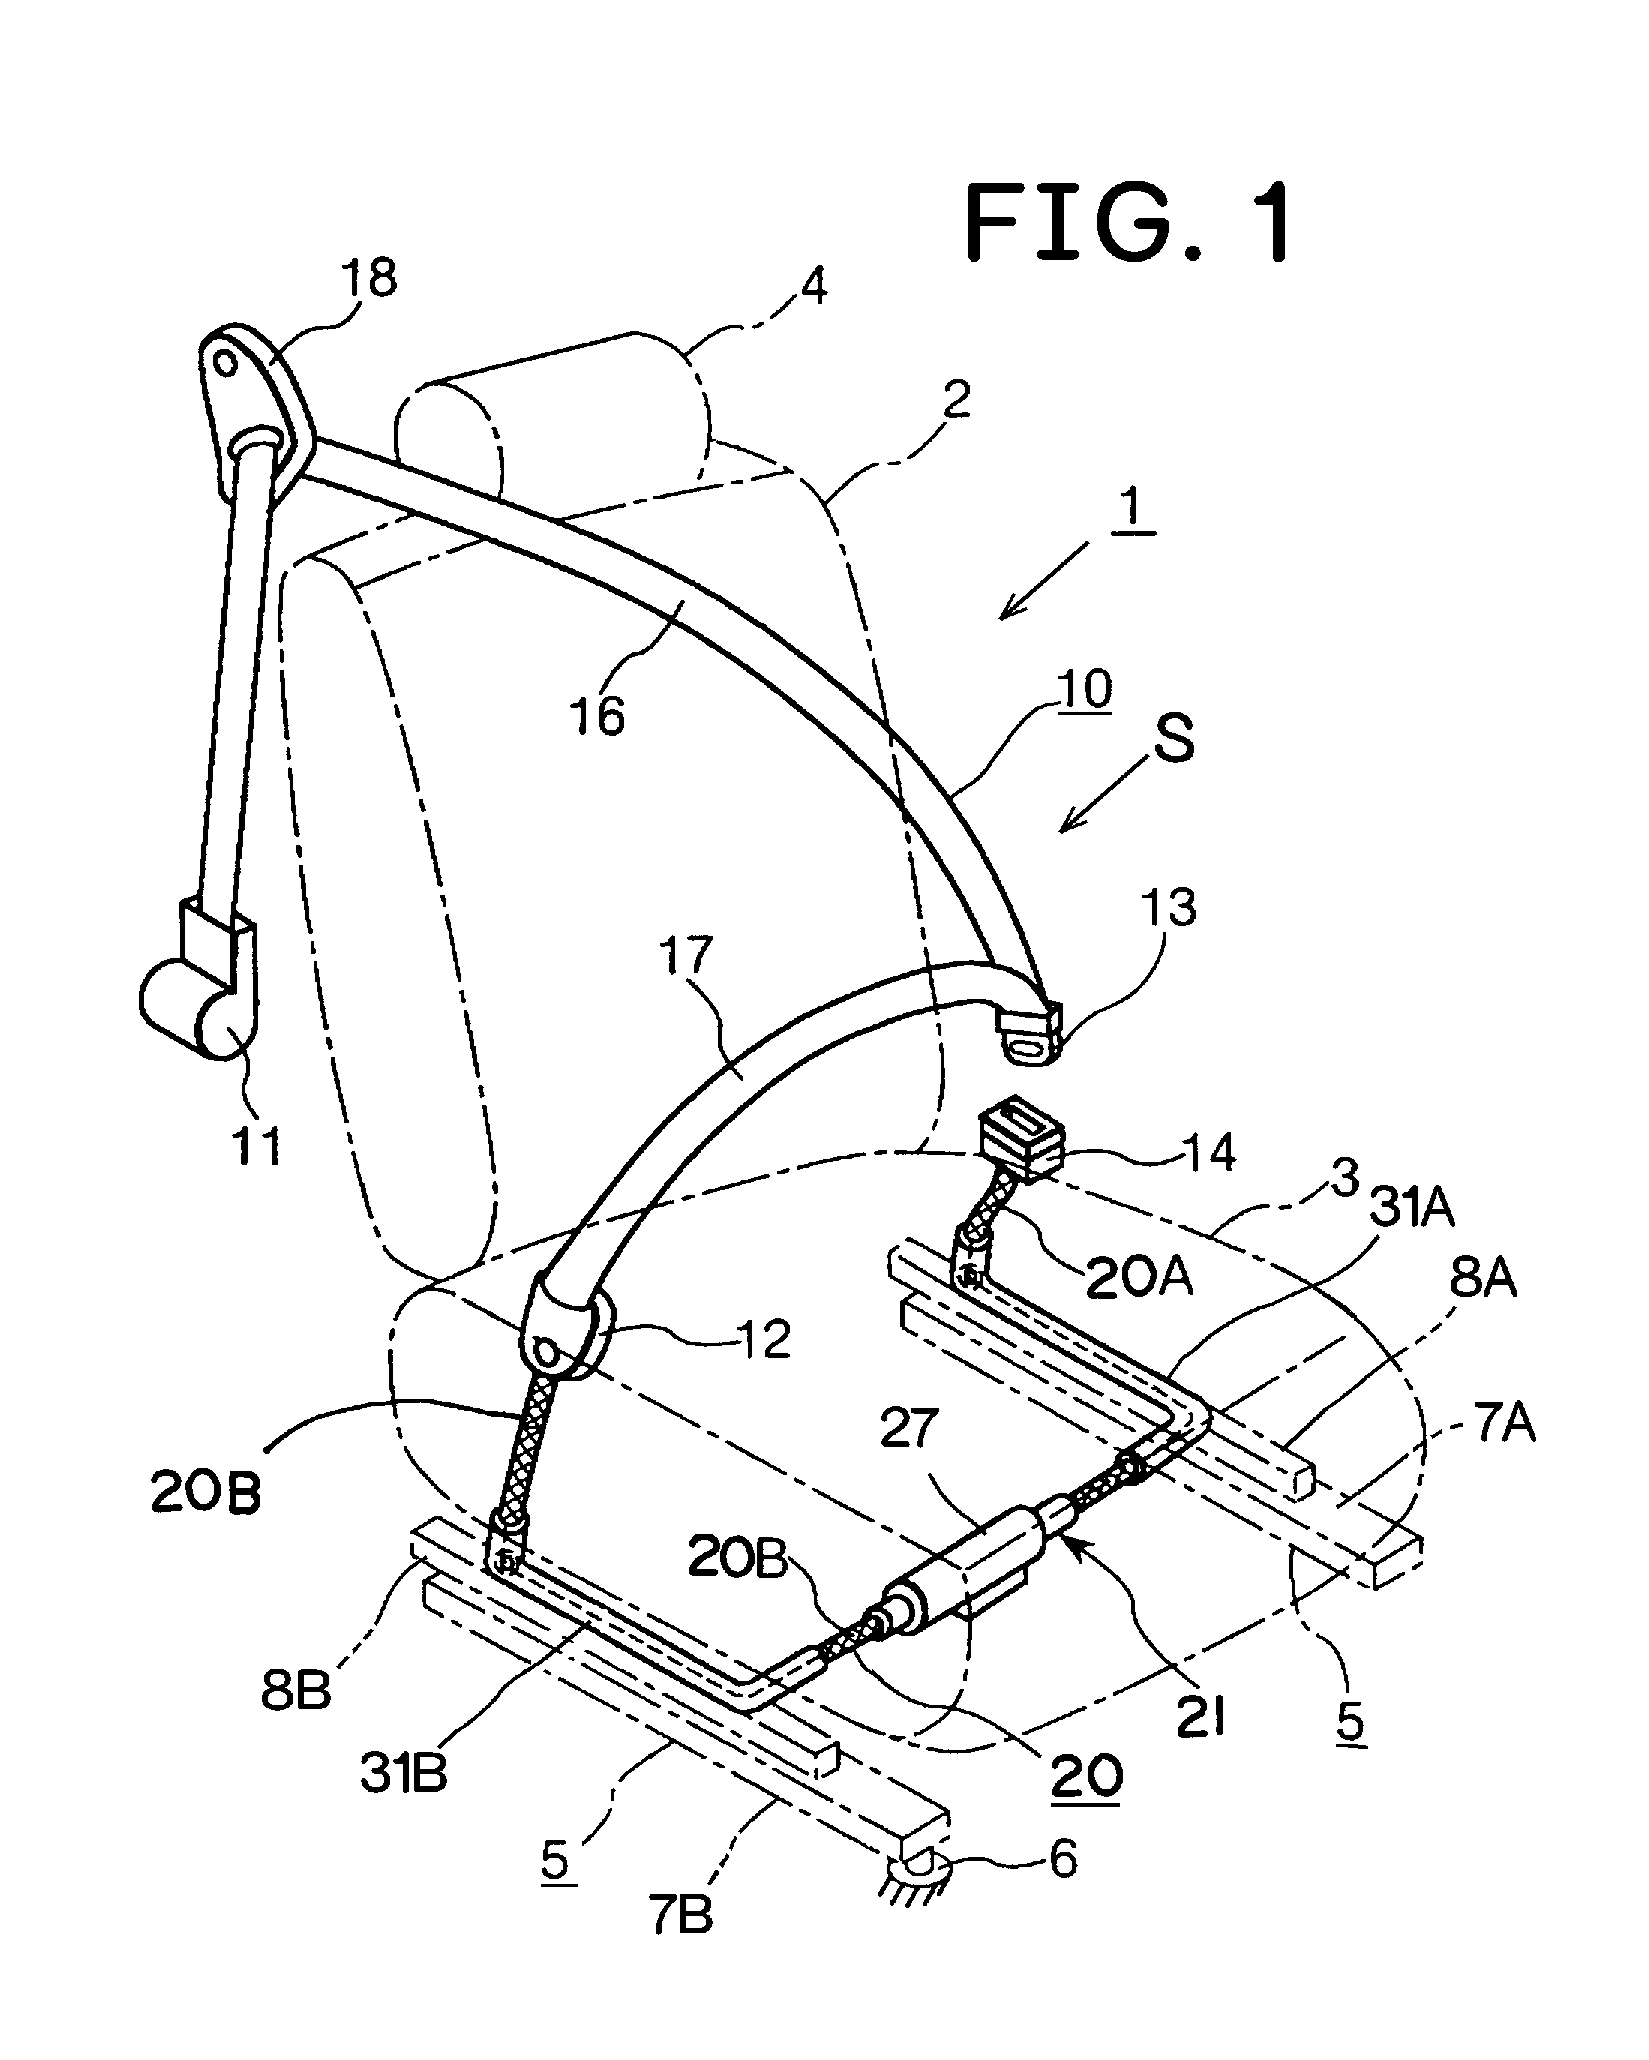 Seatbelt pretensioner mechanism for vehicle seat